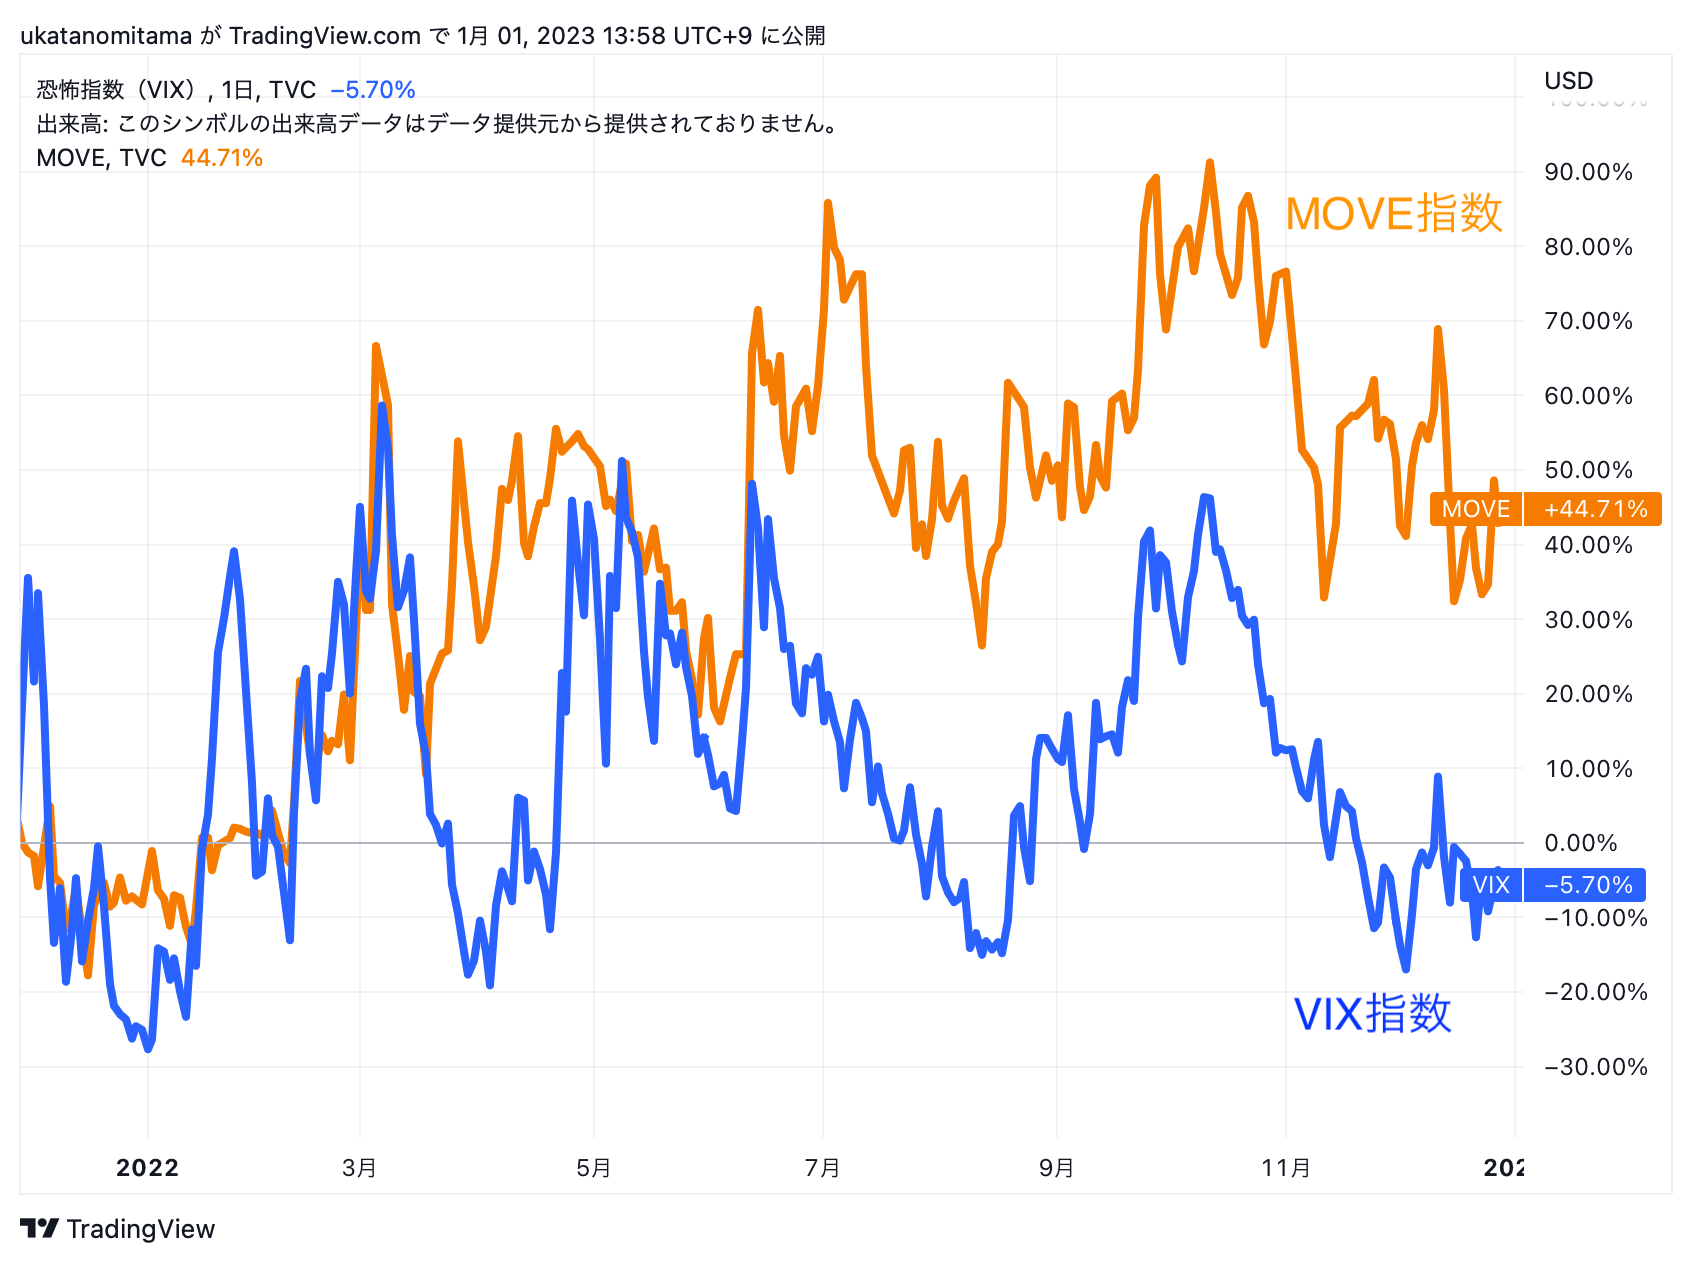 VIX index and MOVE index